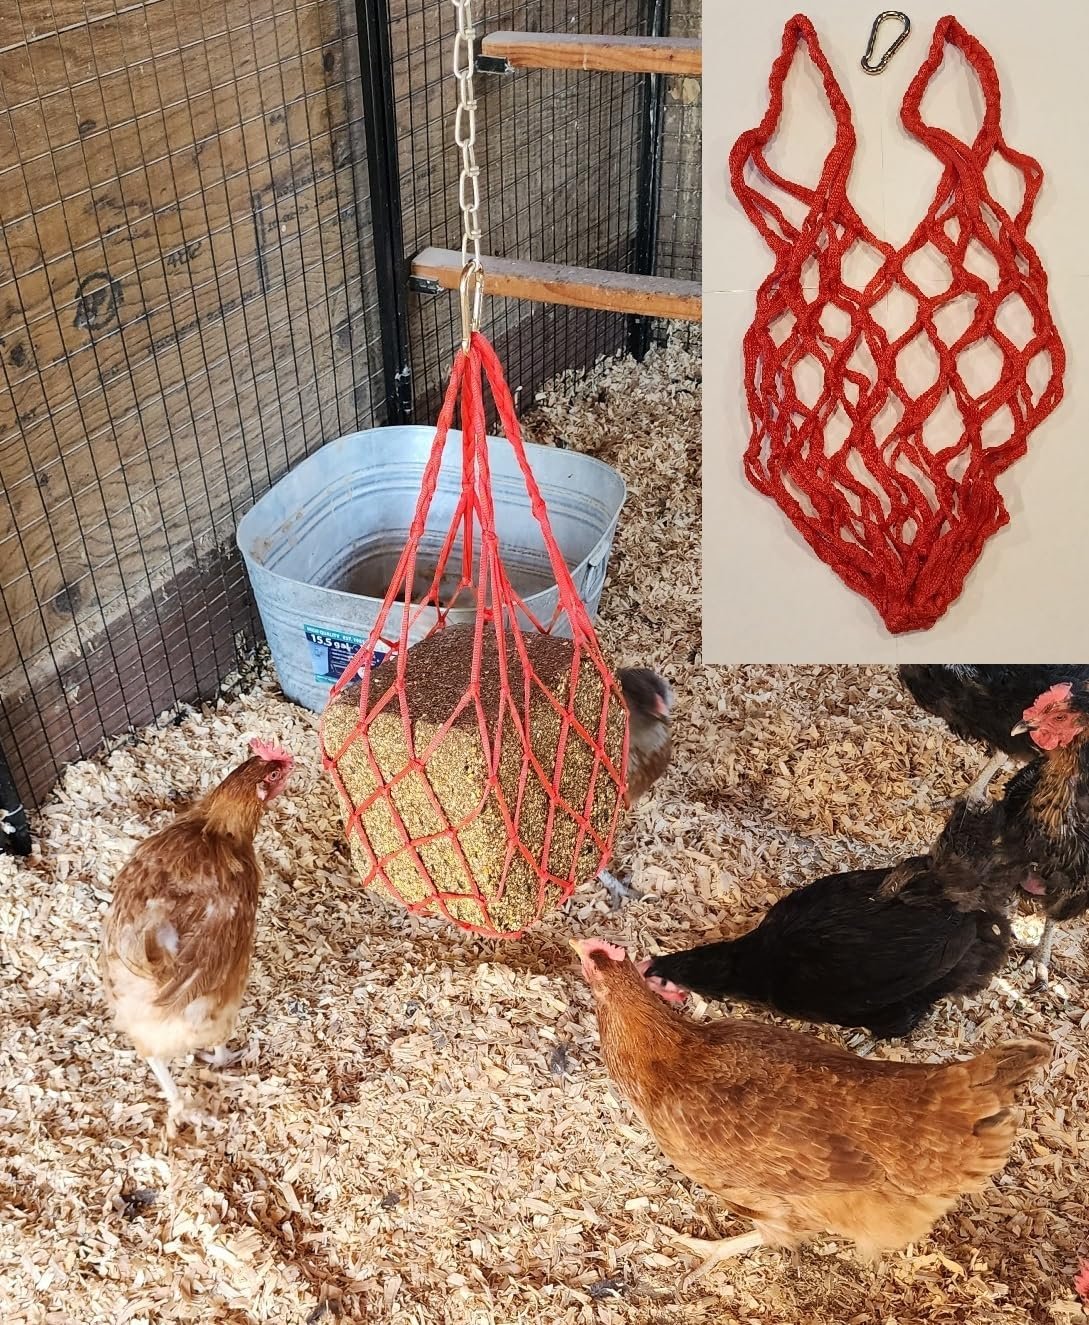 Muzzys RED Chicken Coop Flock Block Bird Seed Hanging Bag Veggie Treat Holder - Poultry Feeder Toy Accessories Cabbage Bowl Sack